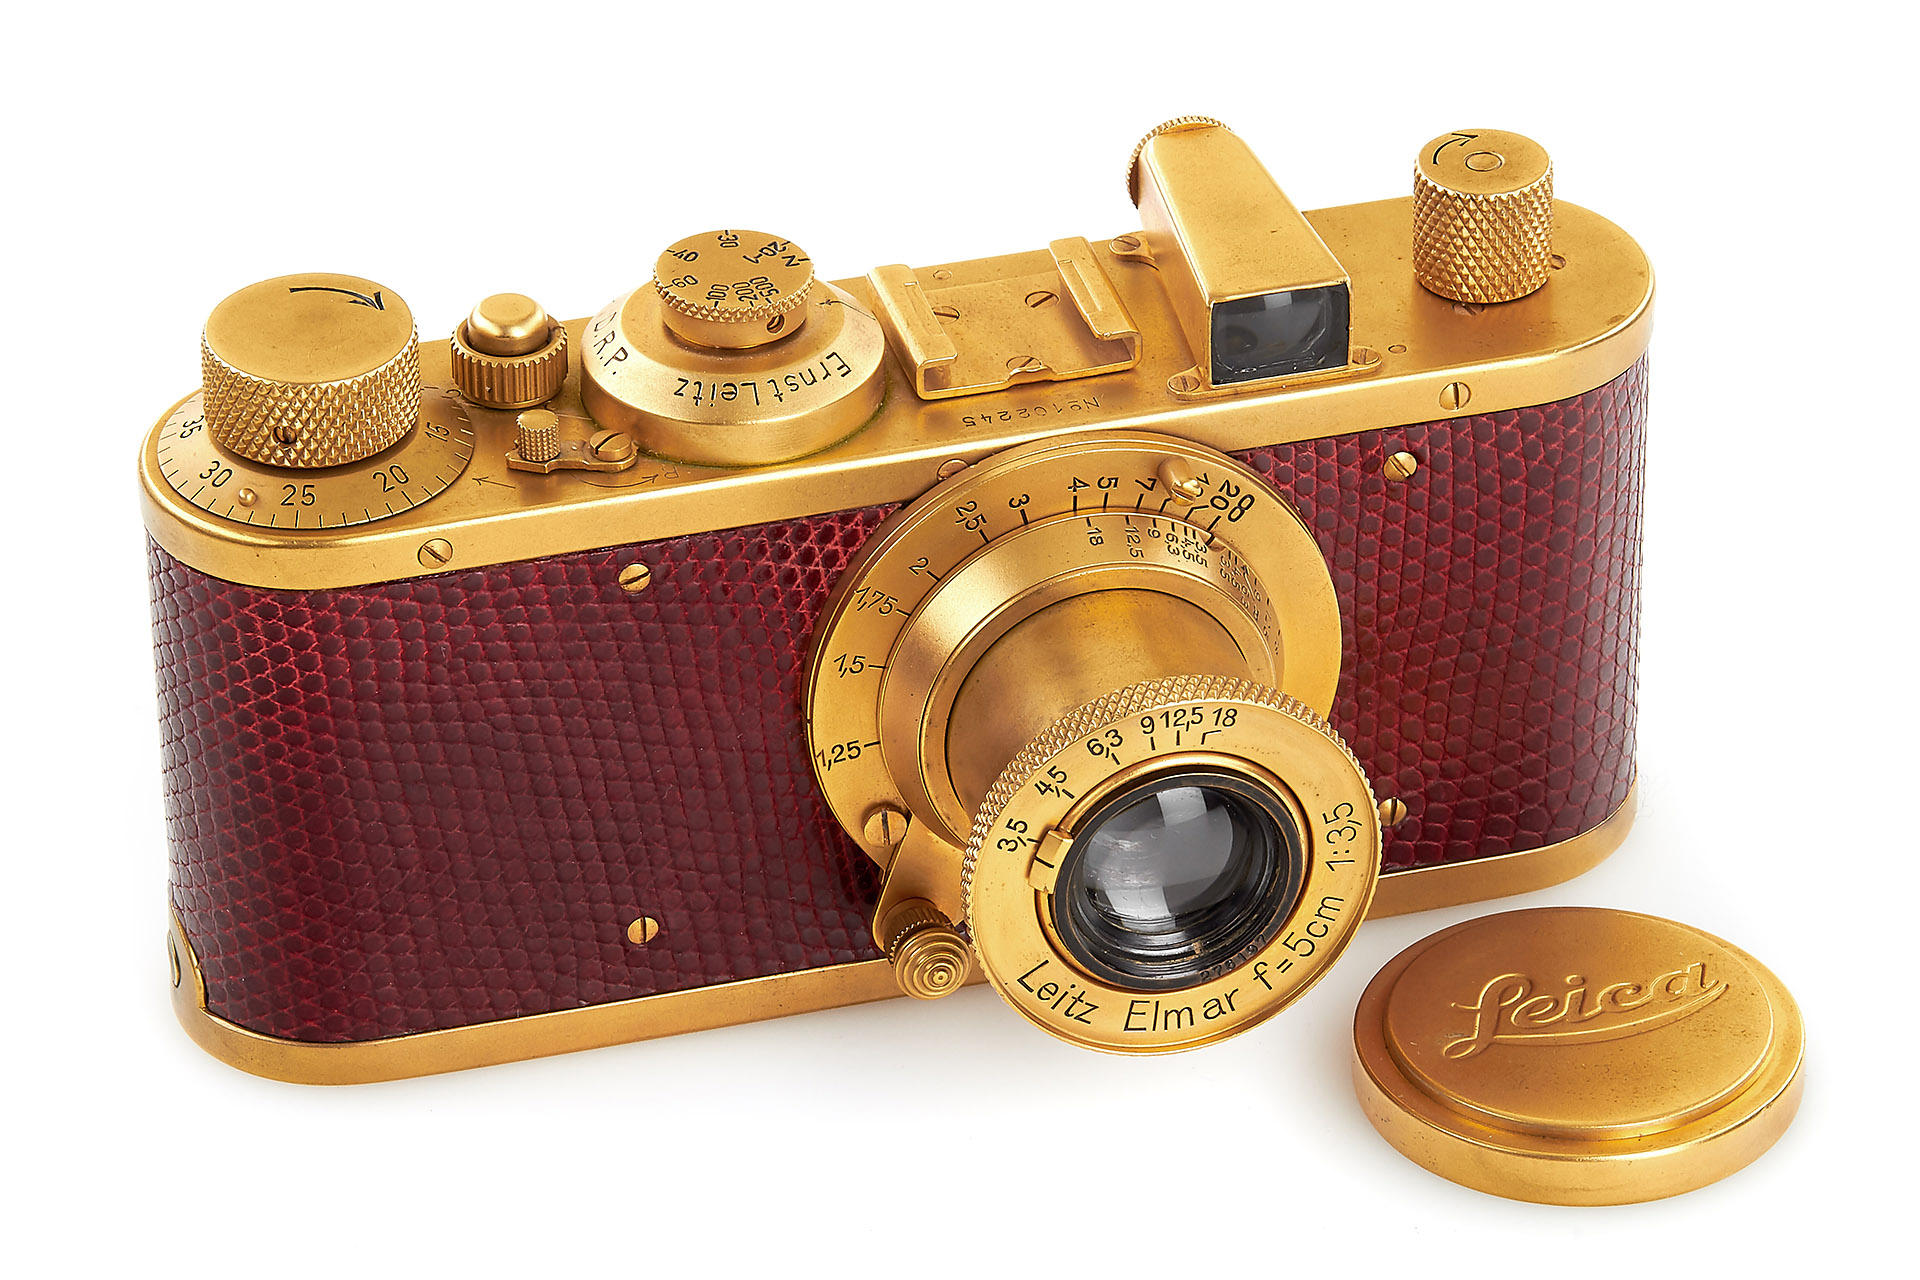 Leica Standard 'Luxus' Replica